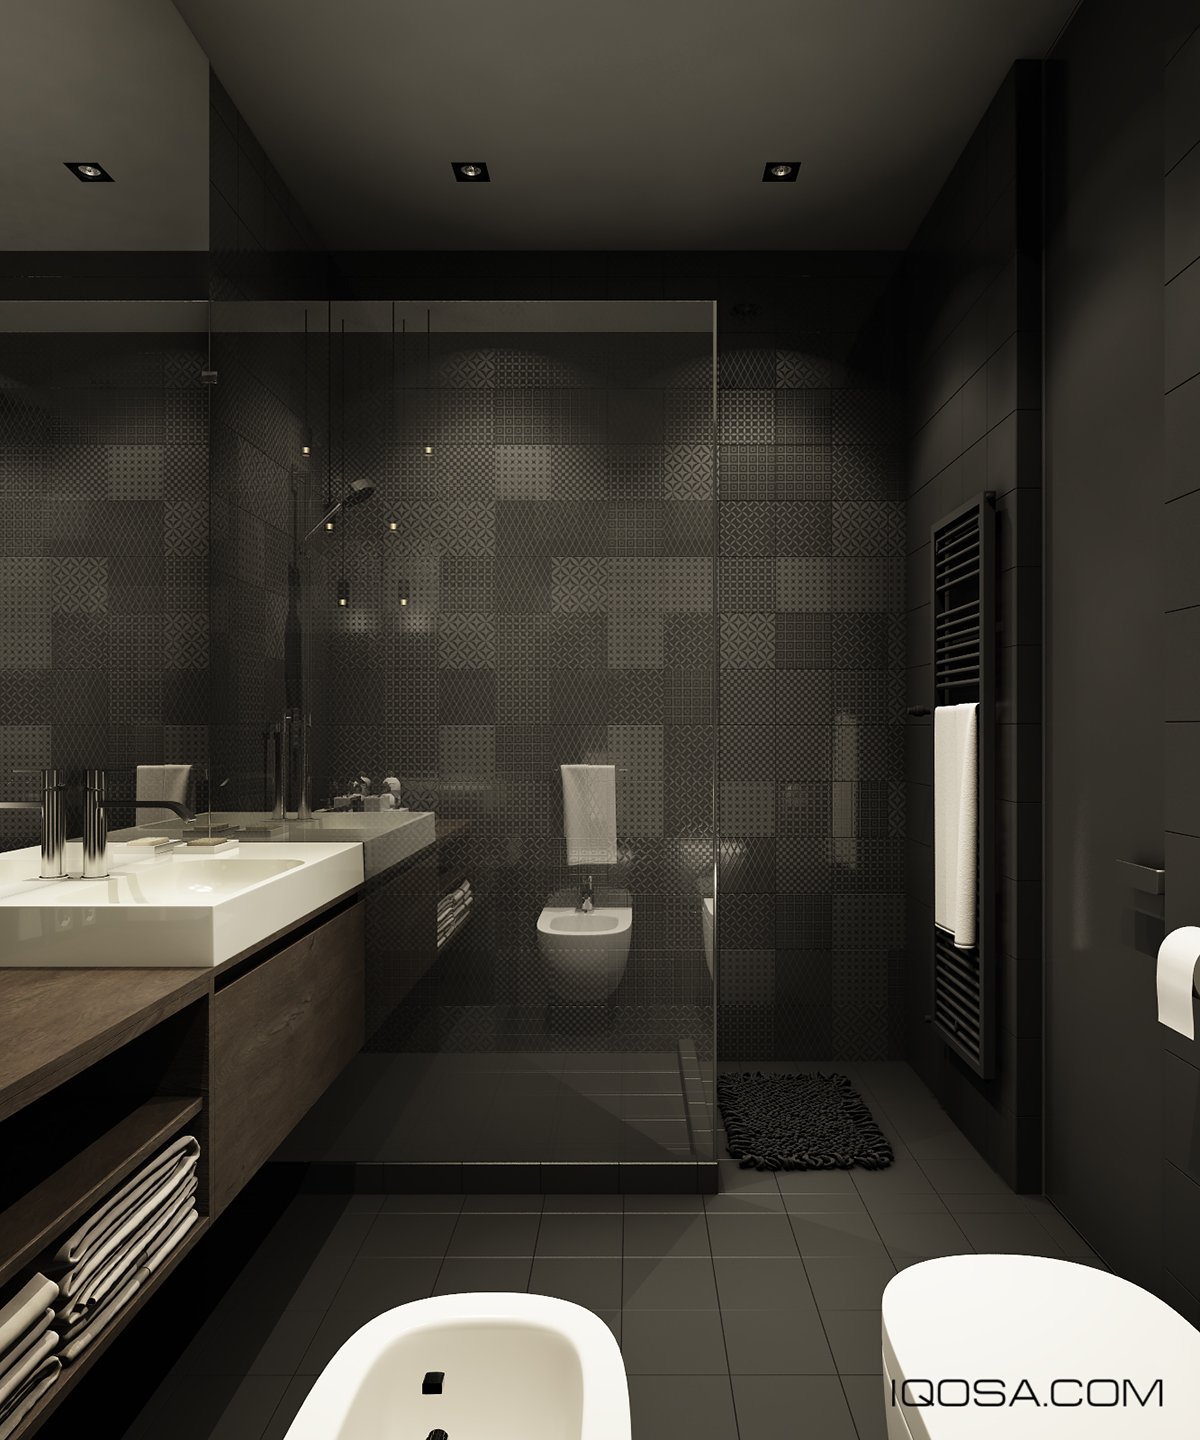 great bathroom with glass shower "width =" 1200 "height =" 1440 "srcset =" https://mileray.com/wp-content/uploads/2020/05/1588516259_260_Luxury-Bathroom-Decorating-Ideas-With-Beautiful-a-Backsplash-Design-Looks.jpg 1200w , https://mileray.com/wp-content/uploads/2016/09/amazing-bathroom-with-glass-shower-IQOSA-250x300.jpg 250w, https://mileray.com/wp-content/uploads / 2016/09 / amazing-bathroom-with-glass-shower-IQOSA-768x922.jpg 768w, https://mileray.com/wp-content/uploads/2016/09/amazing-bathroom-with-glass-shower- IQOSA -853x1024.jpg 853w, https://mileray.com/wp-content/uploads/2016/09/amazing-bathroom-with-glass-shower-IQOSA-696x835.jpg 696w, https://mileray.com/ wp -content / uploads / 2016/09 / amazing-bathroom-with-glass-shower-IQOSA-1068x1282.jpg 1068w, https://mileray.com/wp-content/uploads/2016/09/amazing-bathroom-with -Glasdusche- IQOSA-350x420.jpg 350w "sizes =" (maximum width: 1200px) 100vw, 1200px